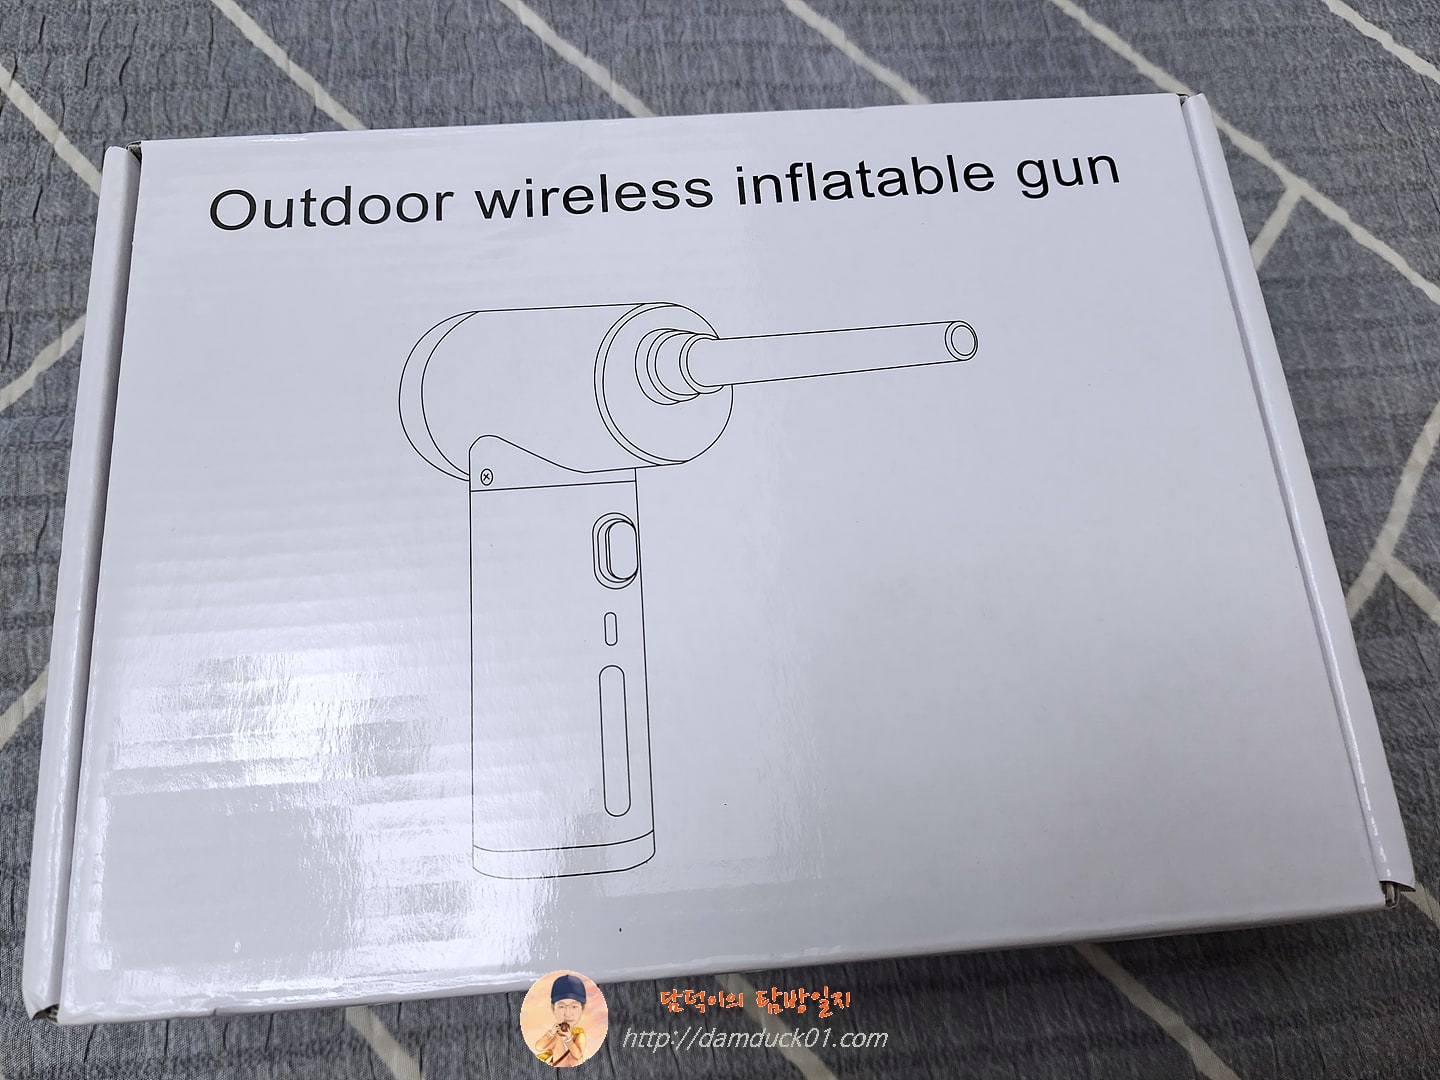 Outdoor wireless inflatable gun